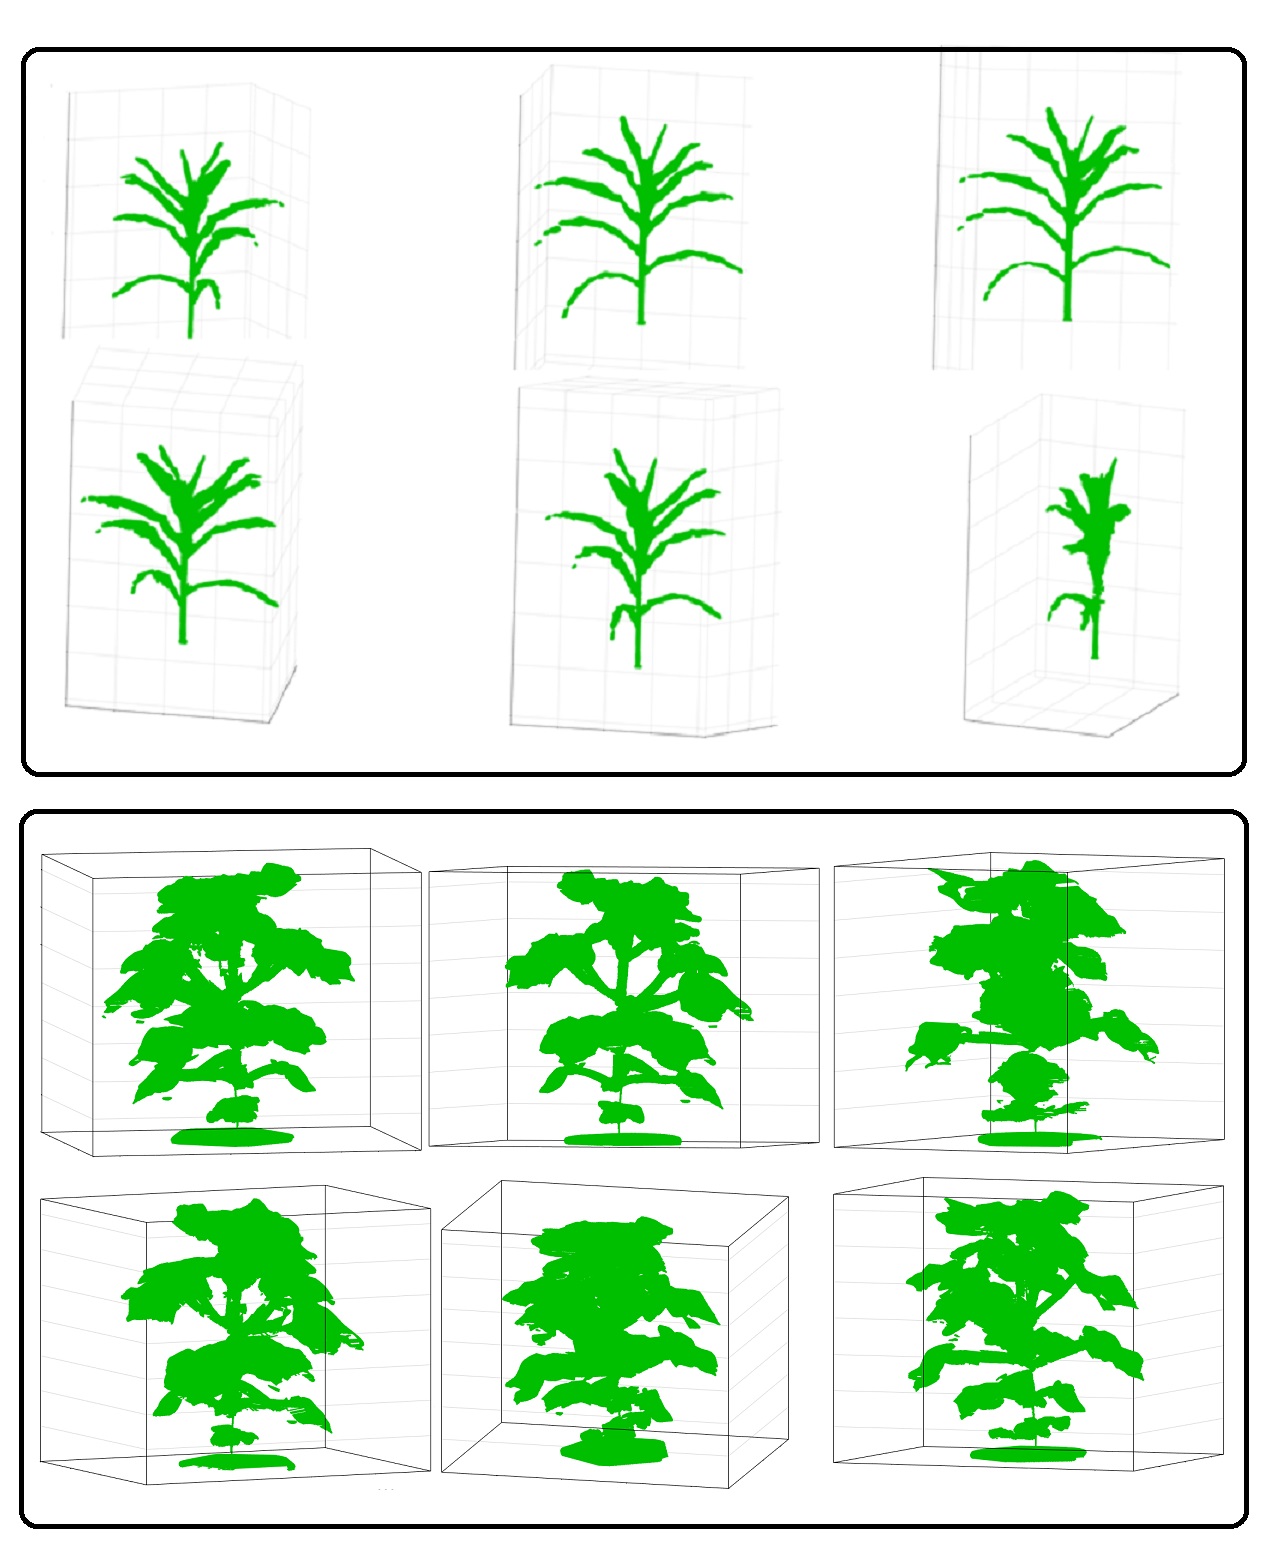 3D voxel-grid construction of maize and cotton plants